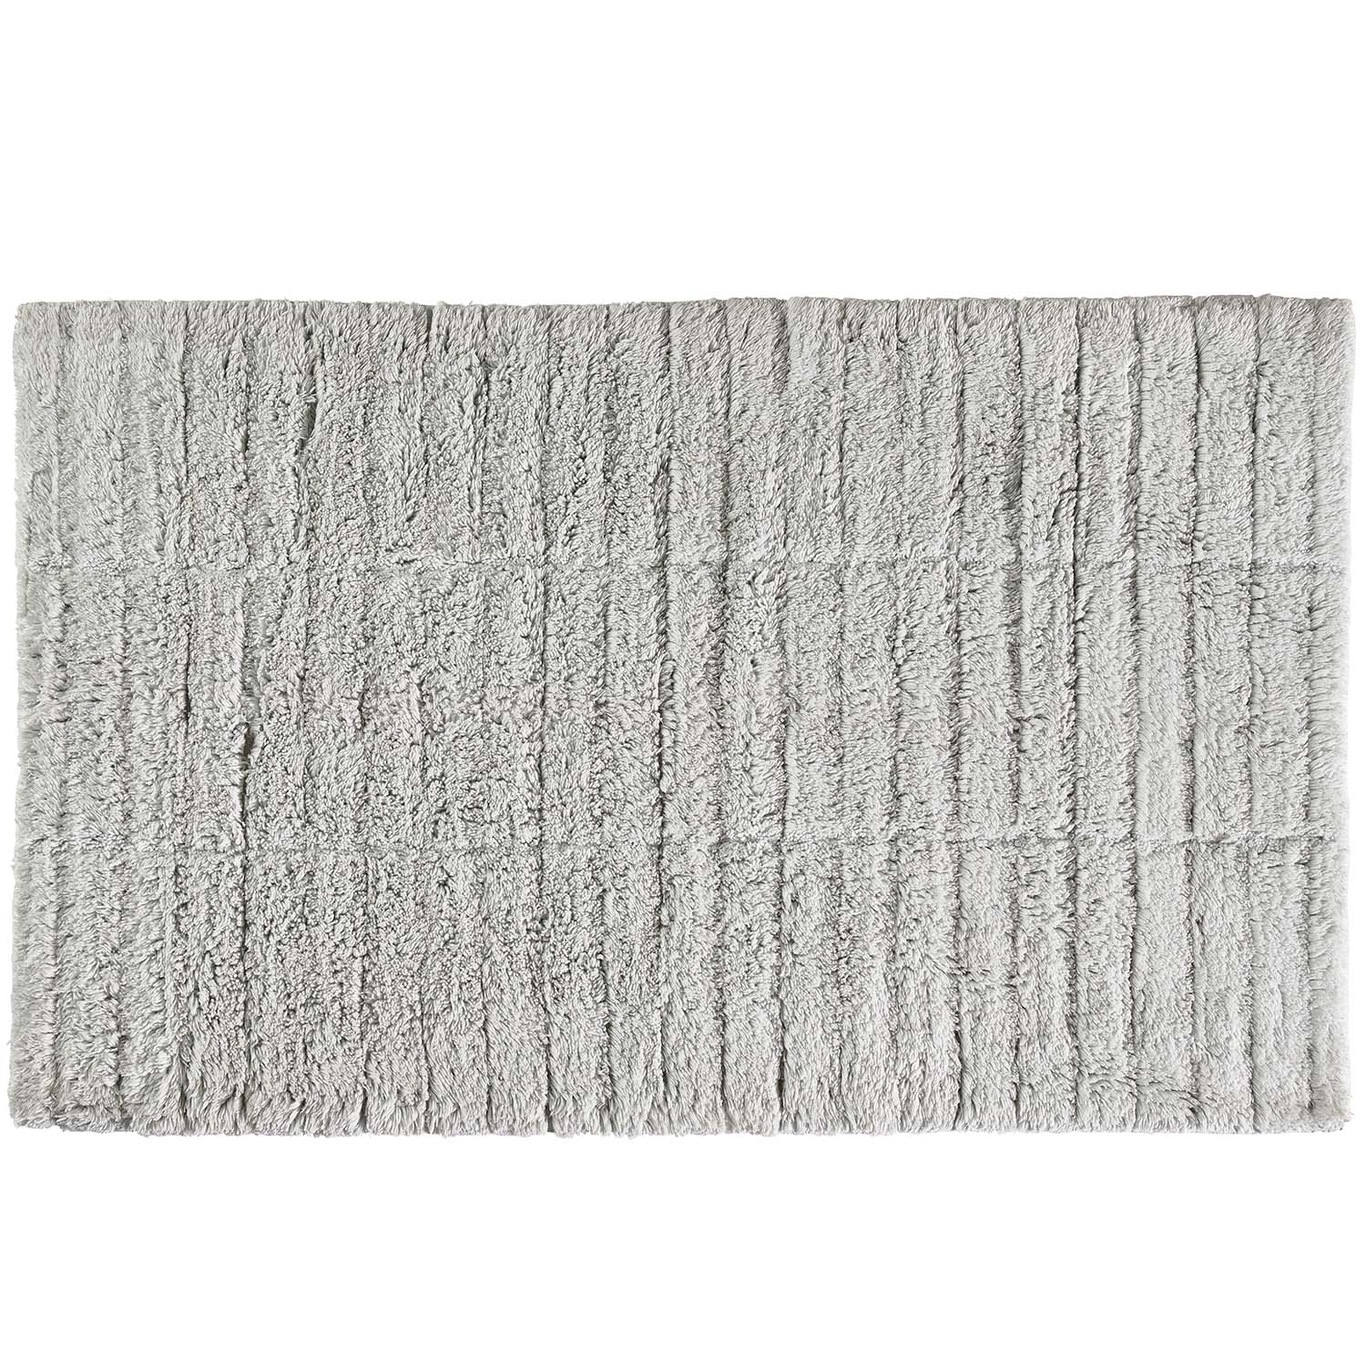 Tilesバスルームラグ 50x80 cm, Soft Grey